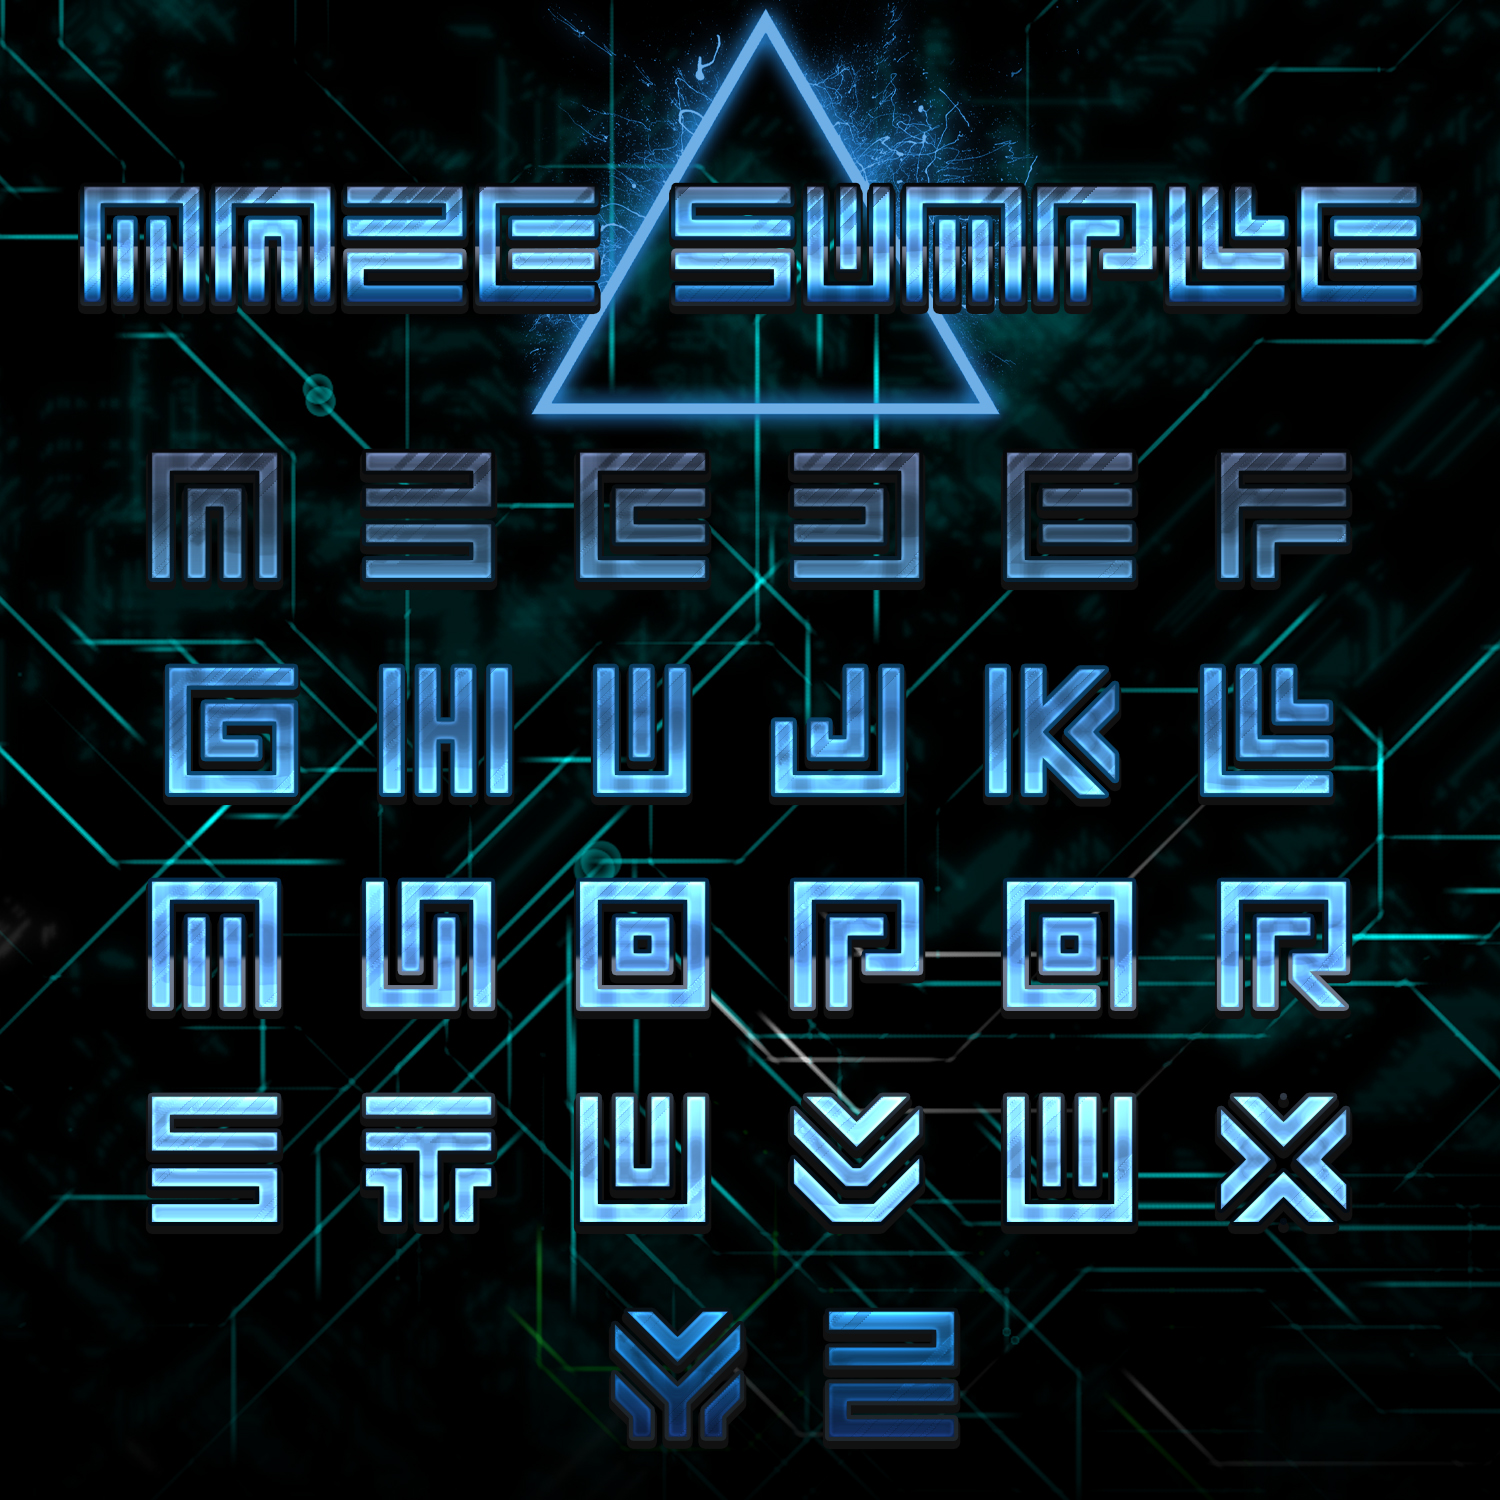 Unique stylish font shown on a blue background.